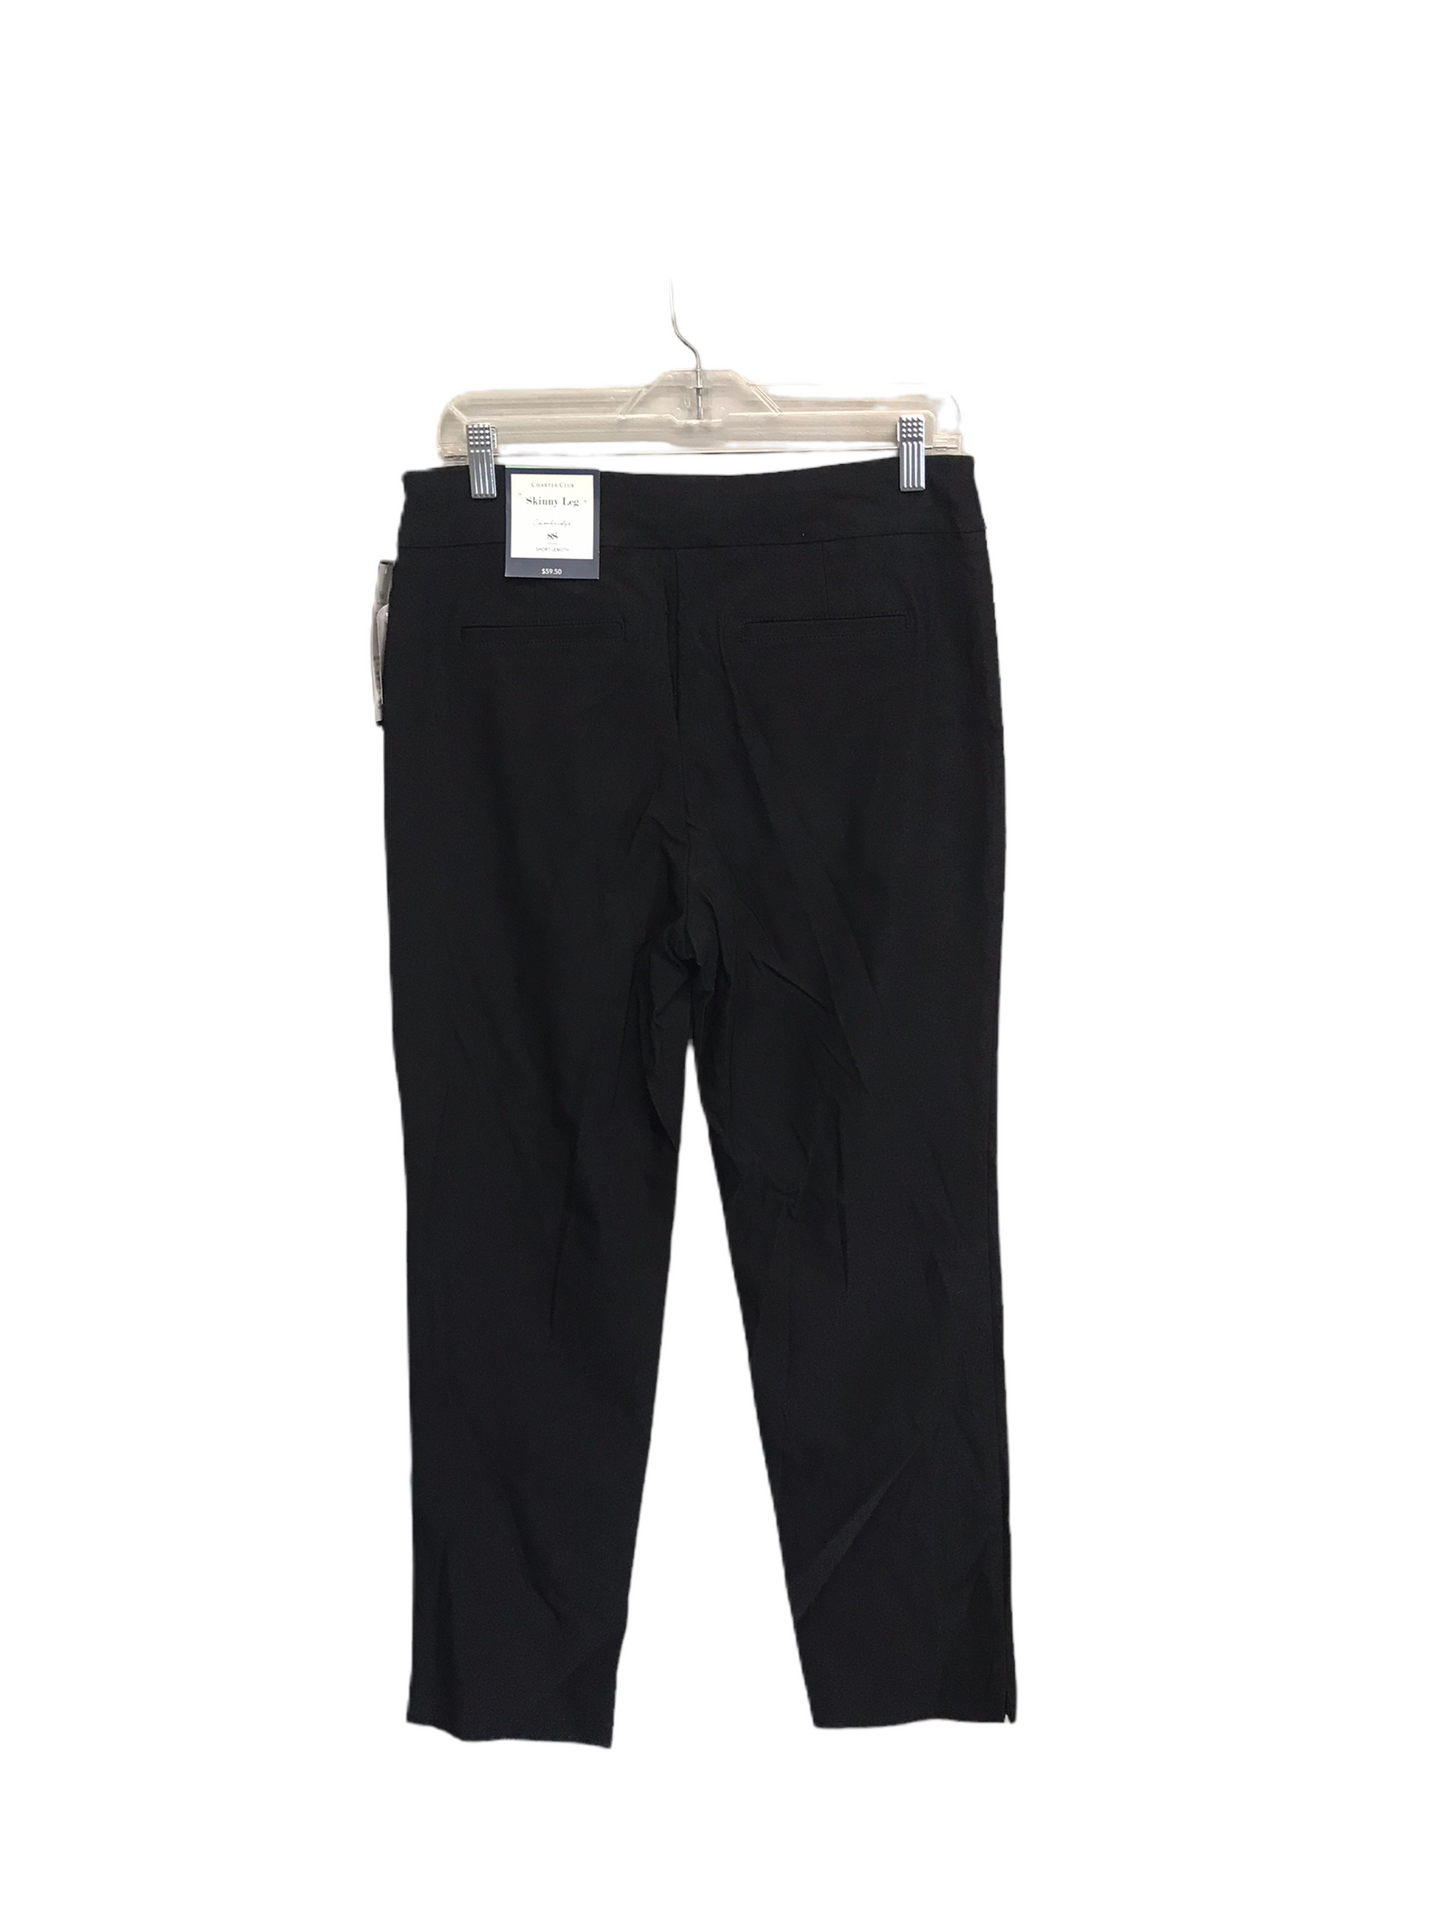 Black Pants Dress By Charter Club, Size: 8